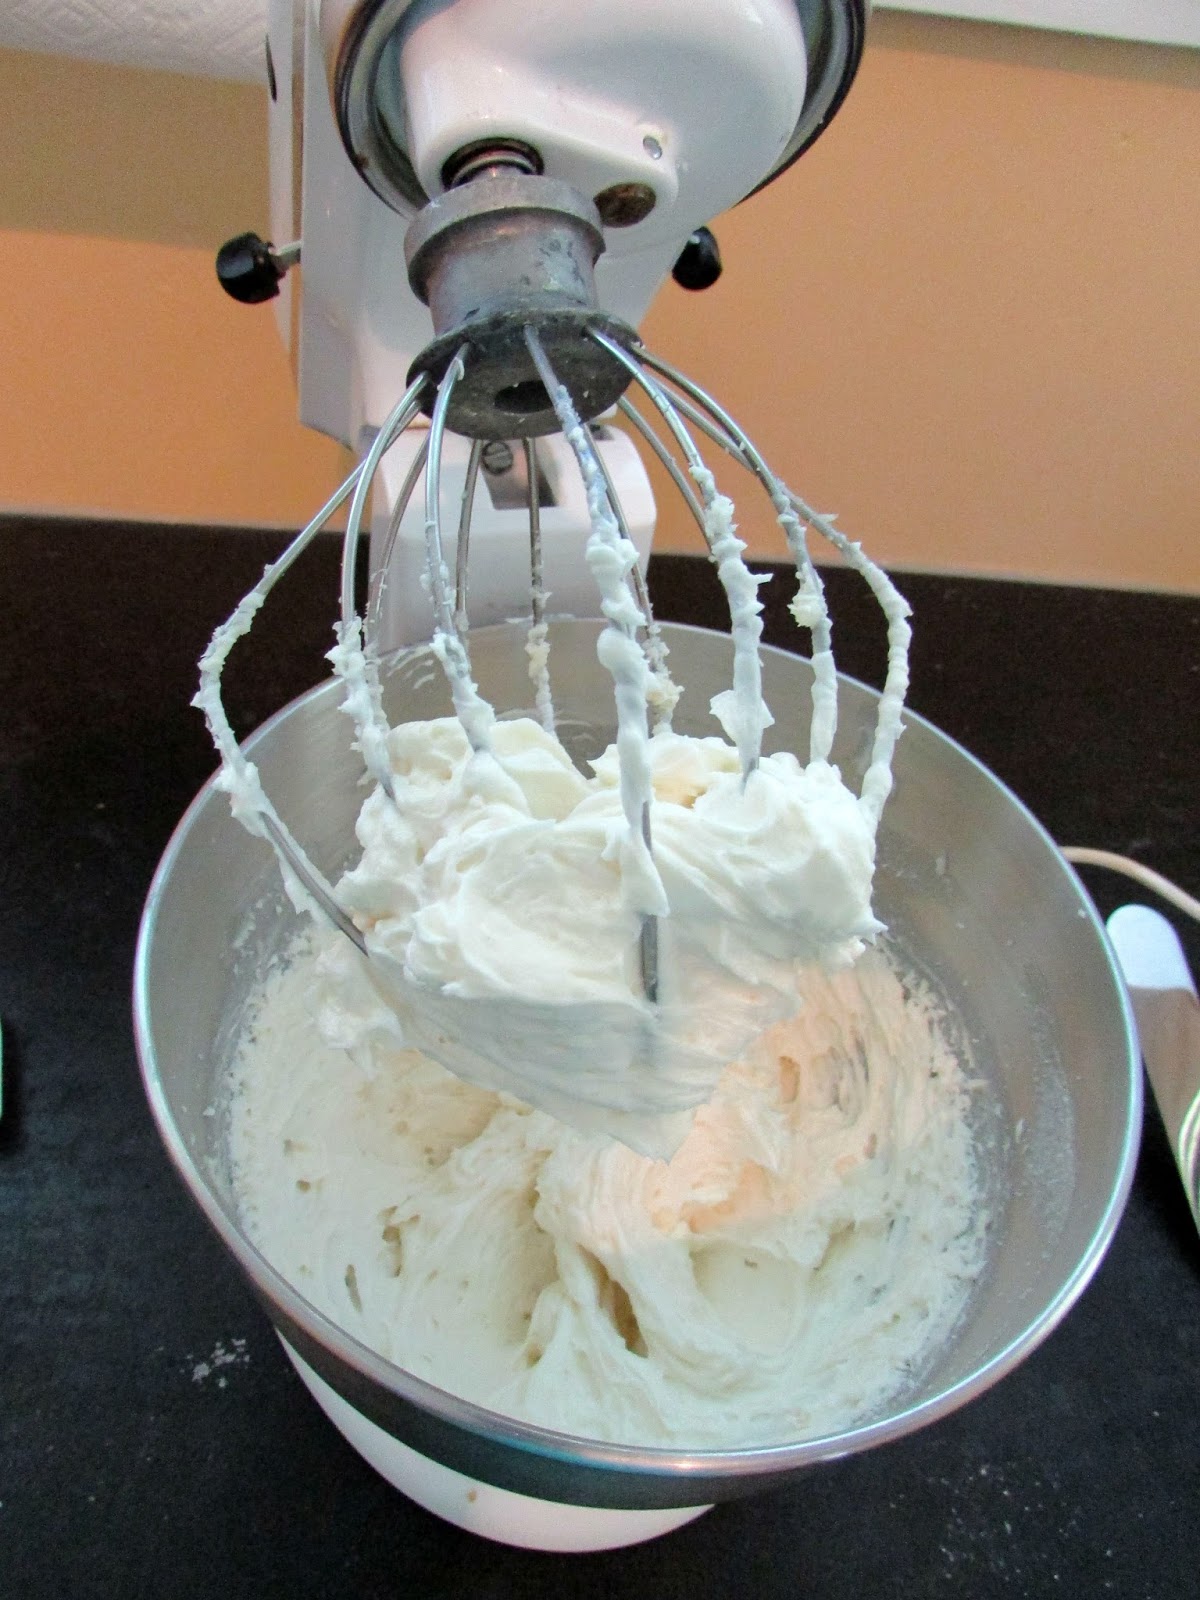 whipped cream - The Mixer / Blender Distinction